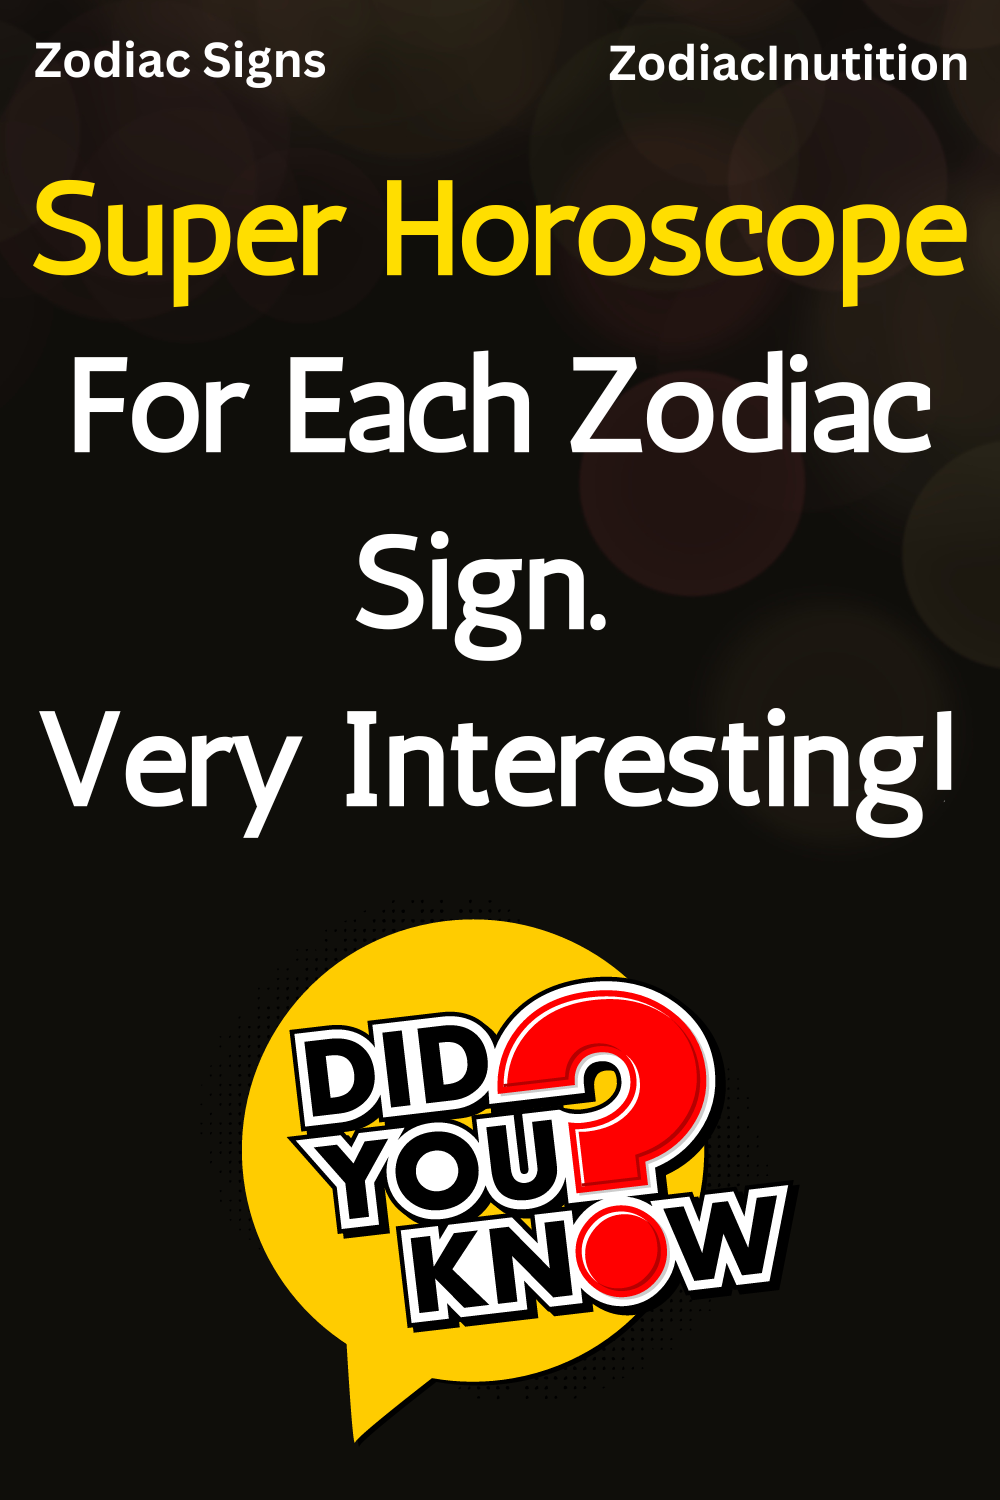 Super Horoscope For Each Zodiac Sign. Very Interesting!